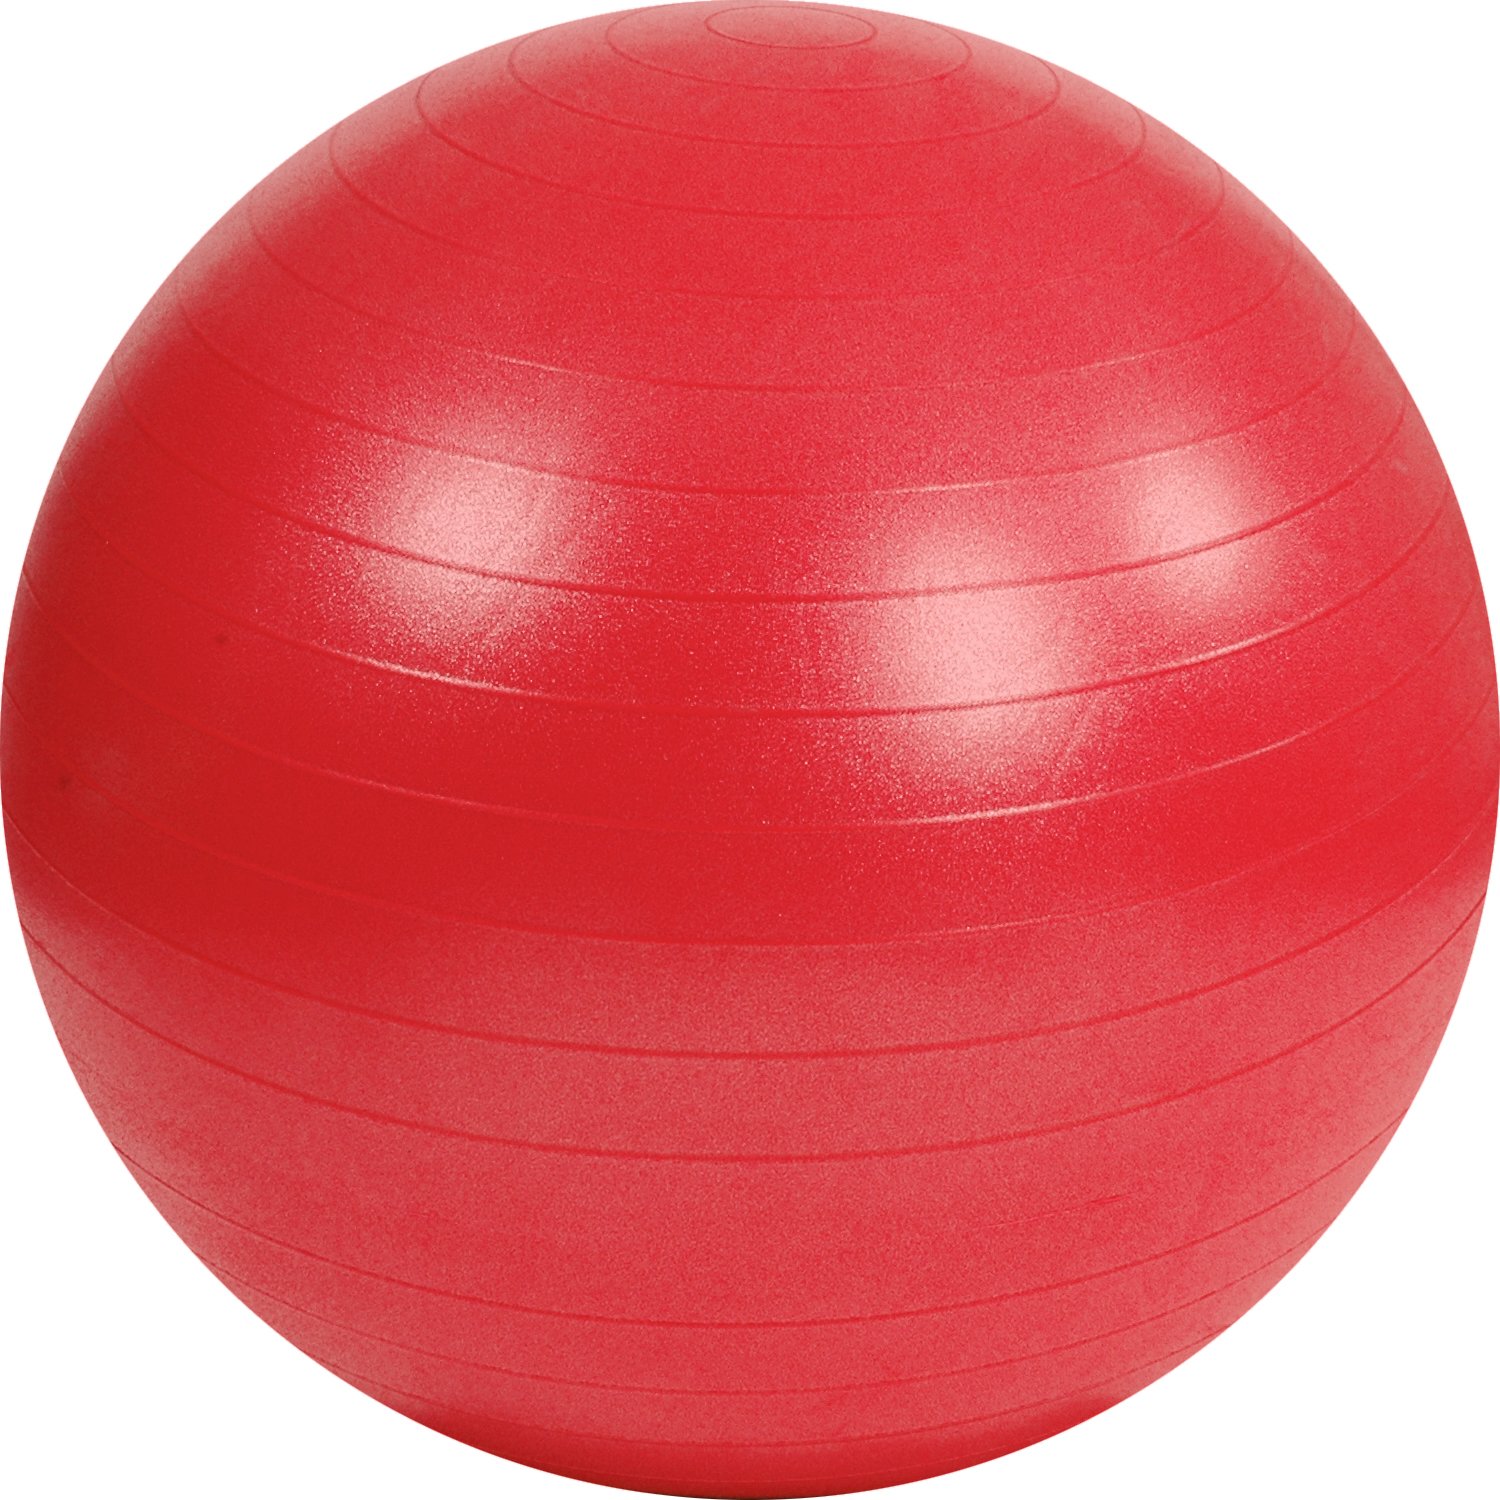 Yoga ball 55 cm Rood Mambo Max